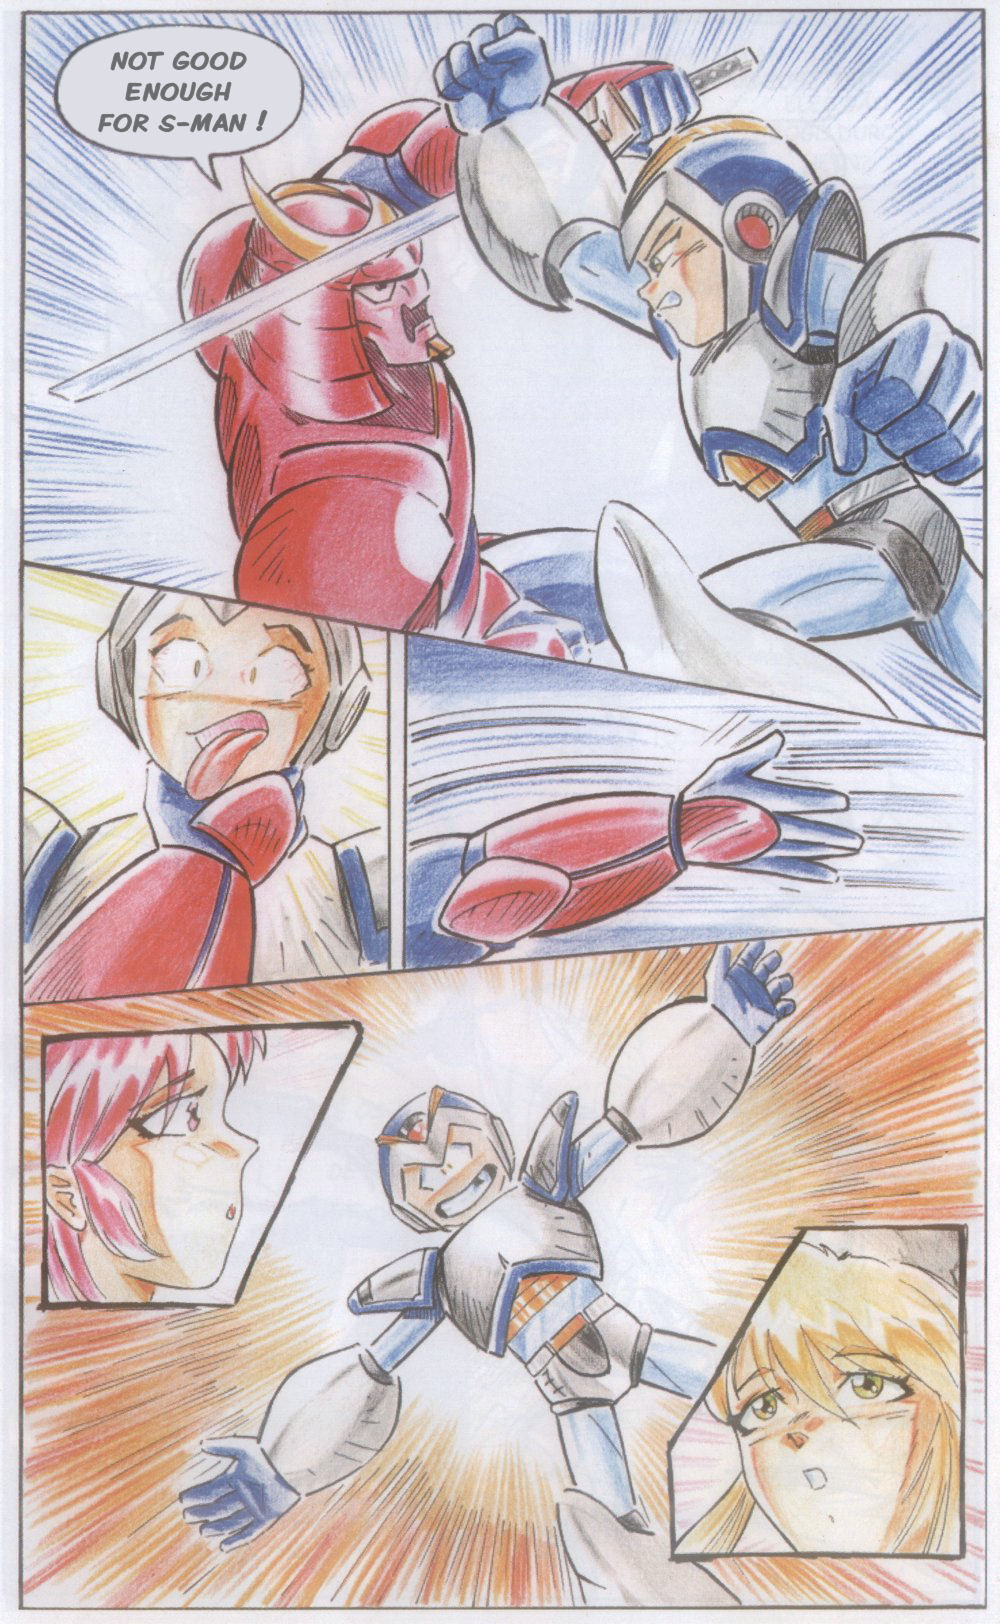 Novas Aventuras de Megaman Issue 10.